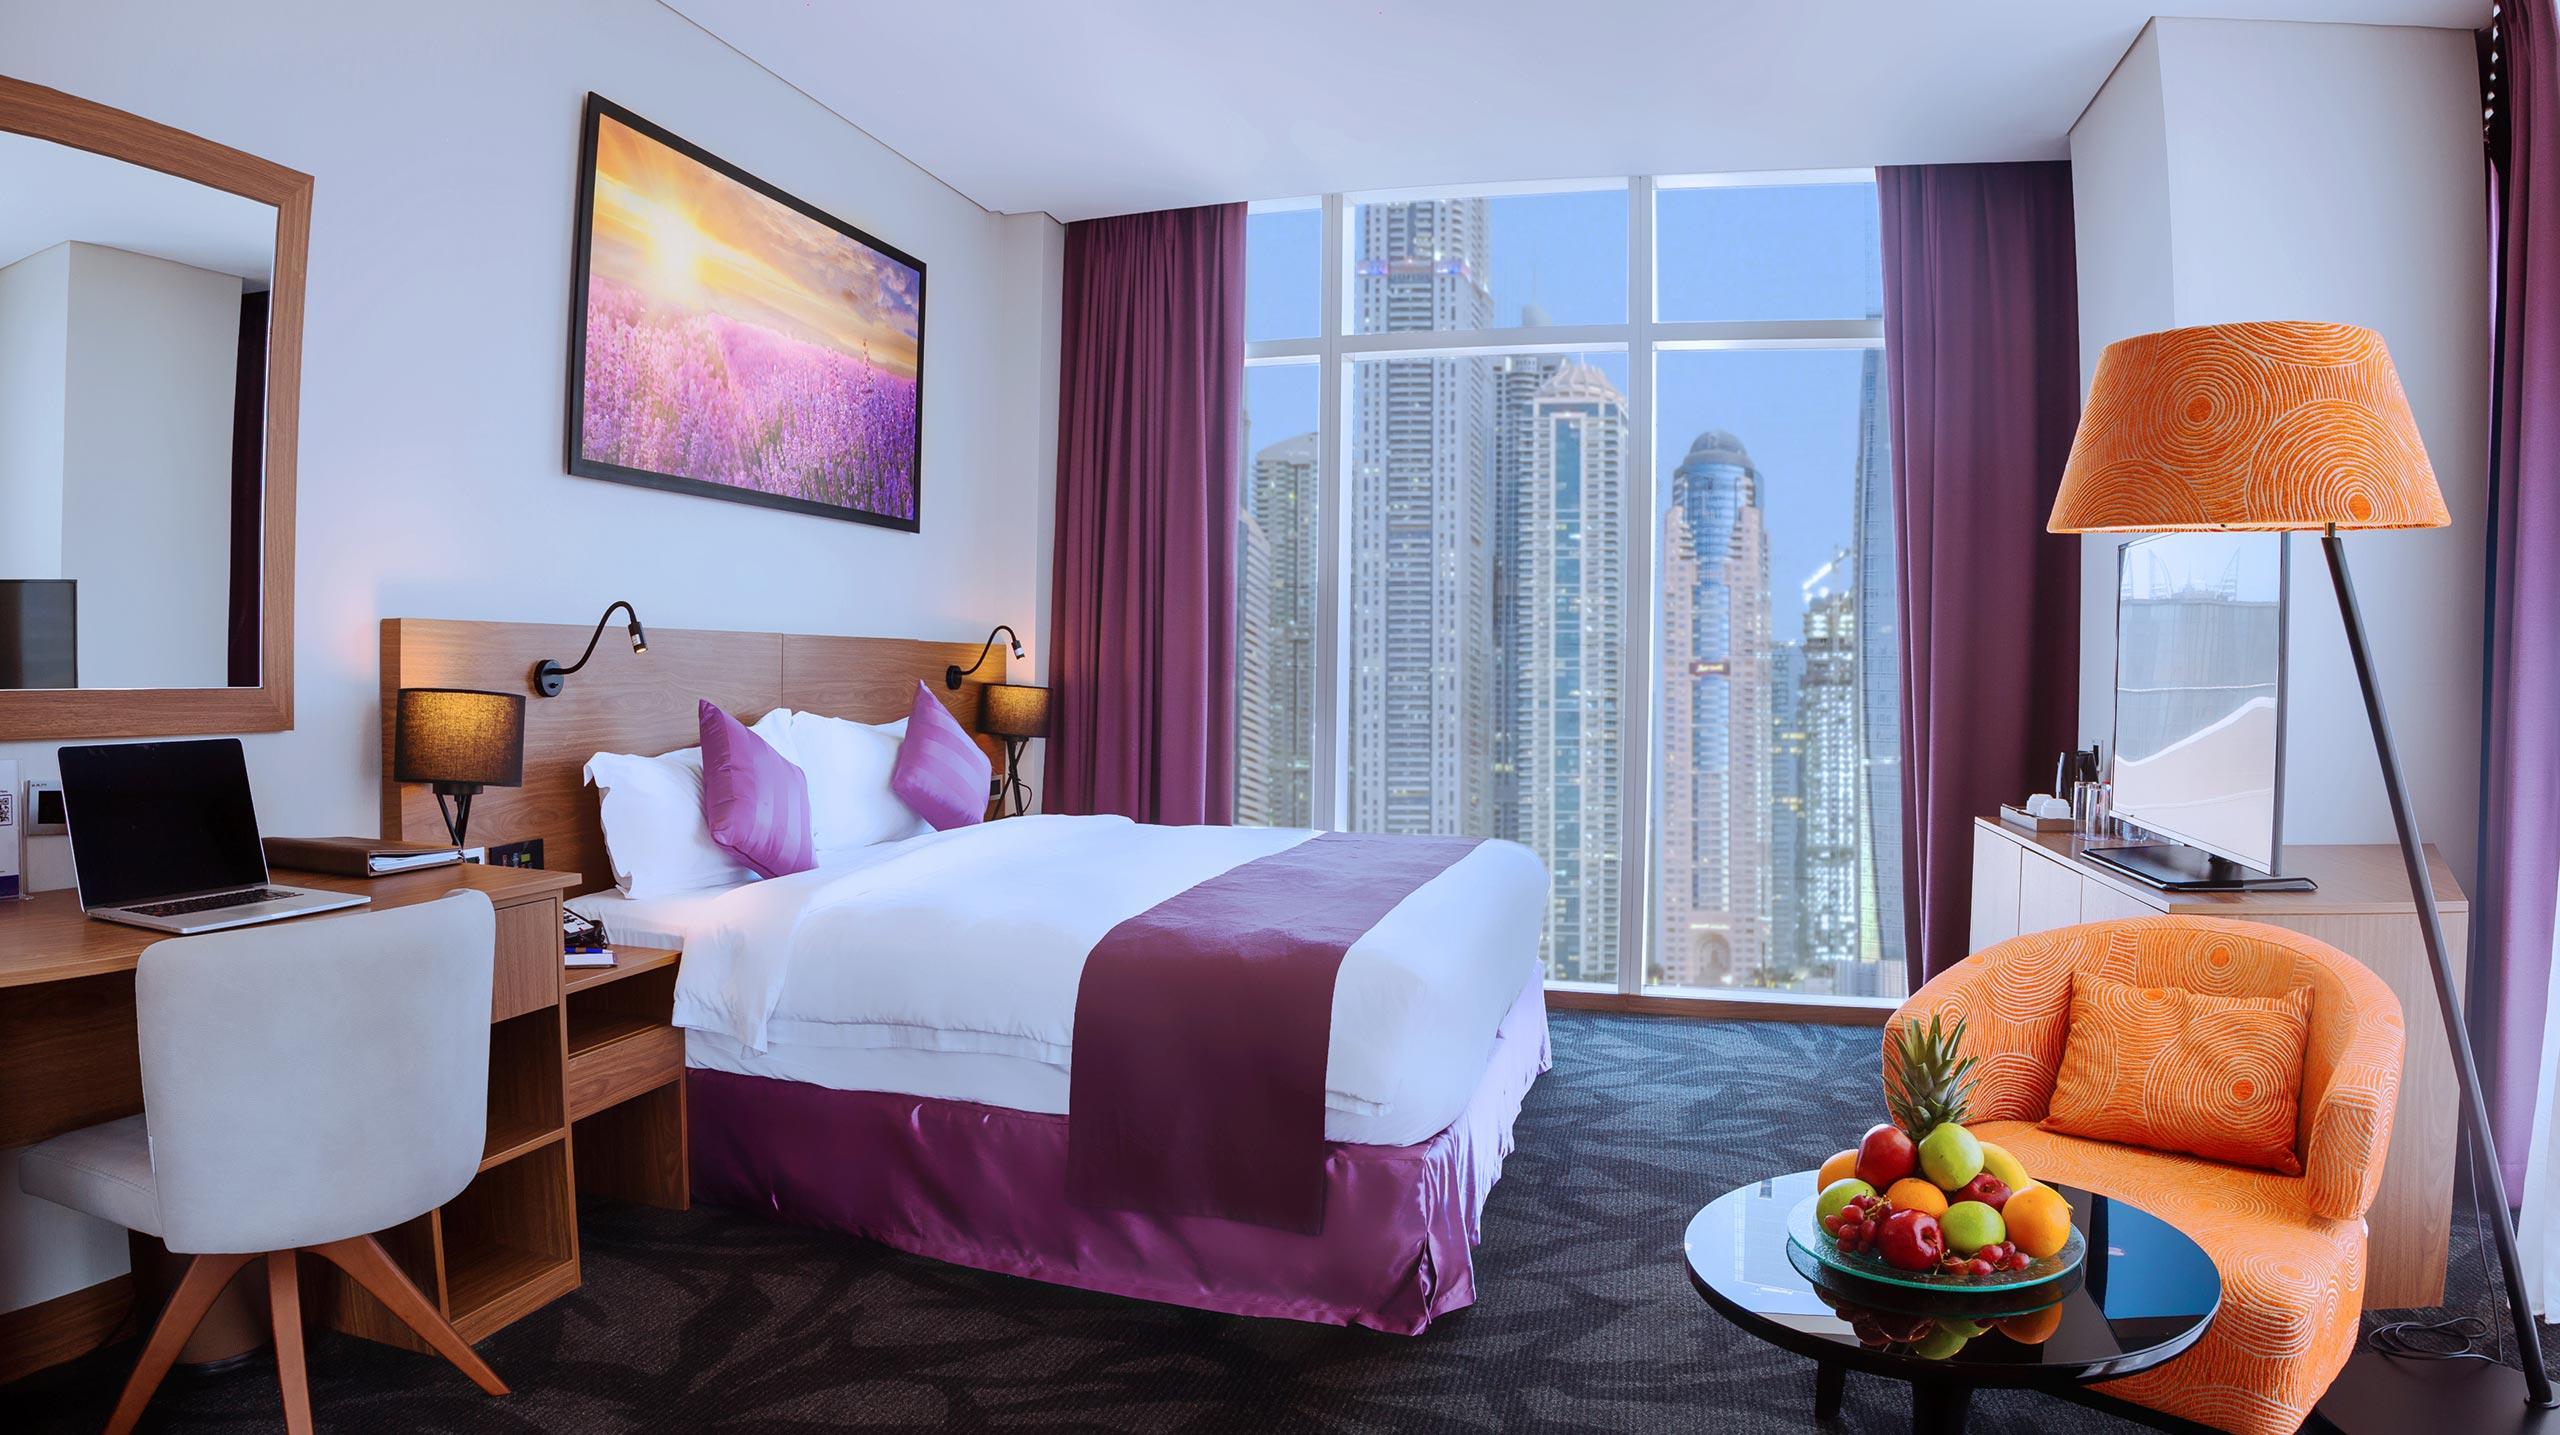 Park Regis Business Bay, Dubai Hotel in Business Bay District